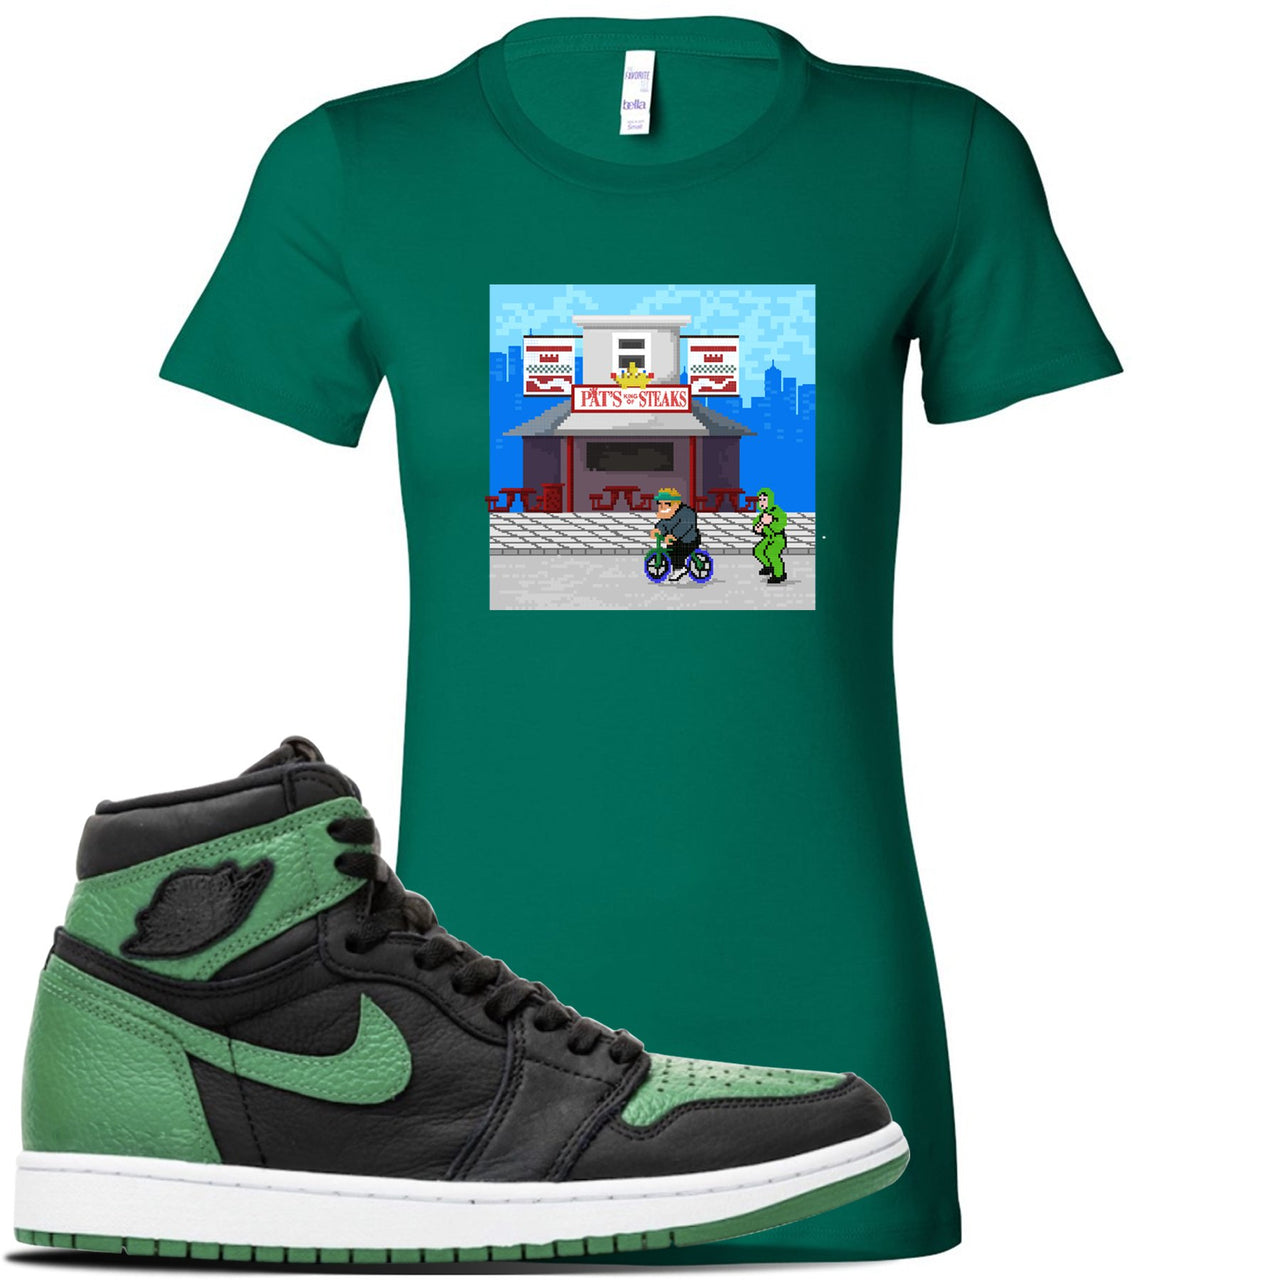 Pine Green Gym OG Retro High 1s Sneaker Kelly Green Women's T Shirt | Women's Tees to match Pine Green Gym OG Retro High 1s Shoes | Pats Steak Little Mac